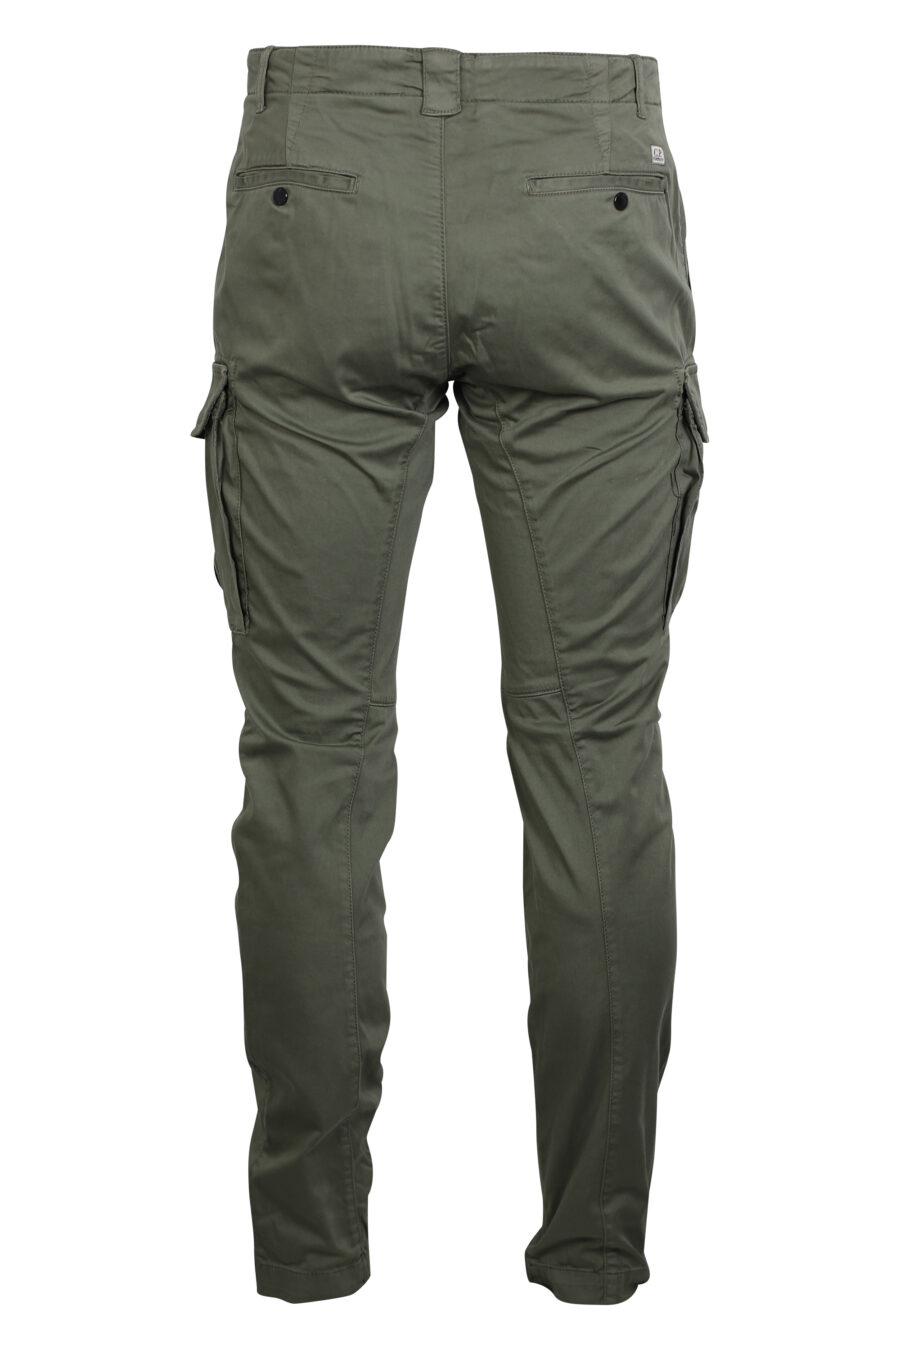 Pantalon cargo vert militaire avec mini-logo circulaire - IMG 2486